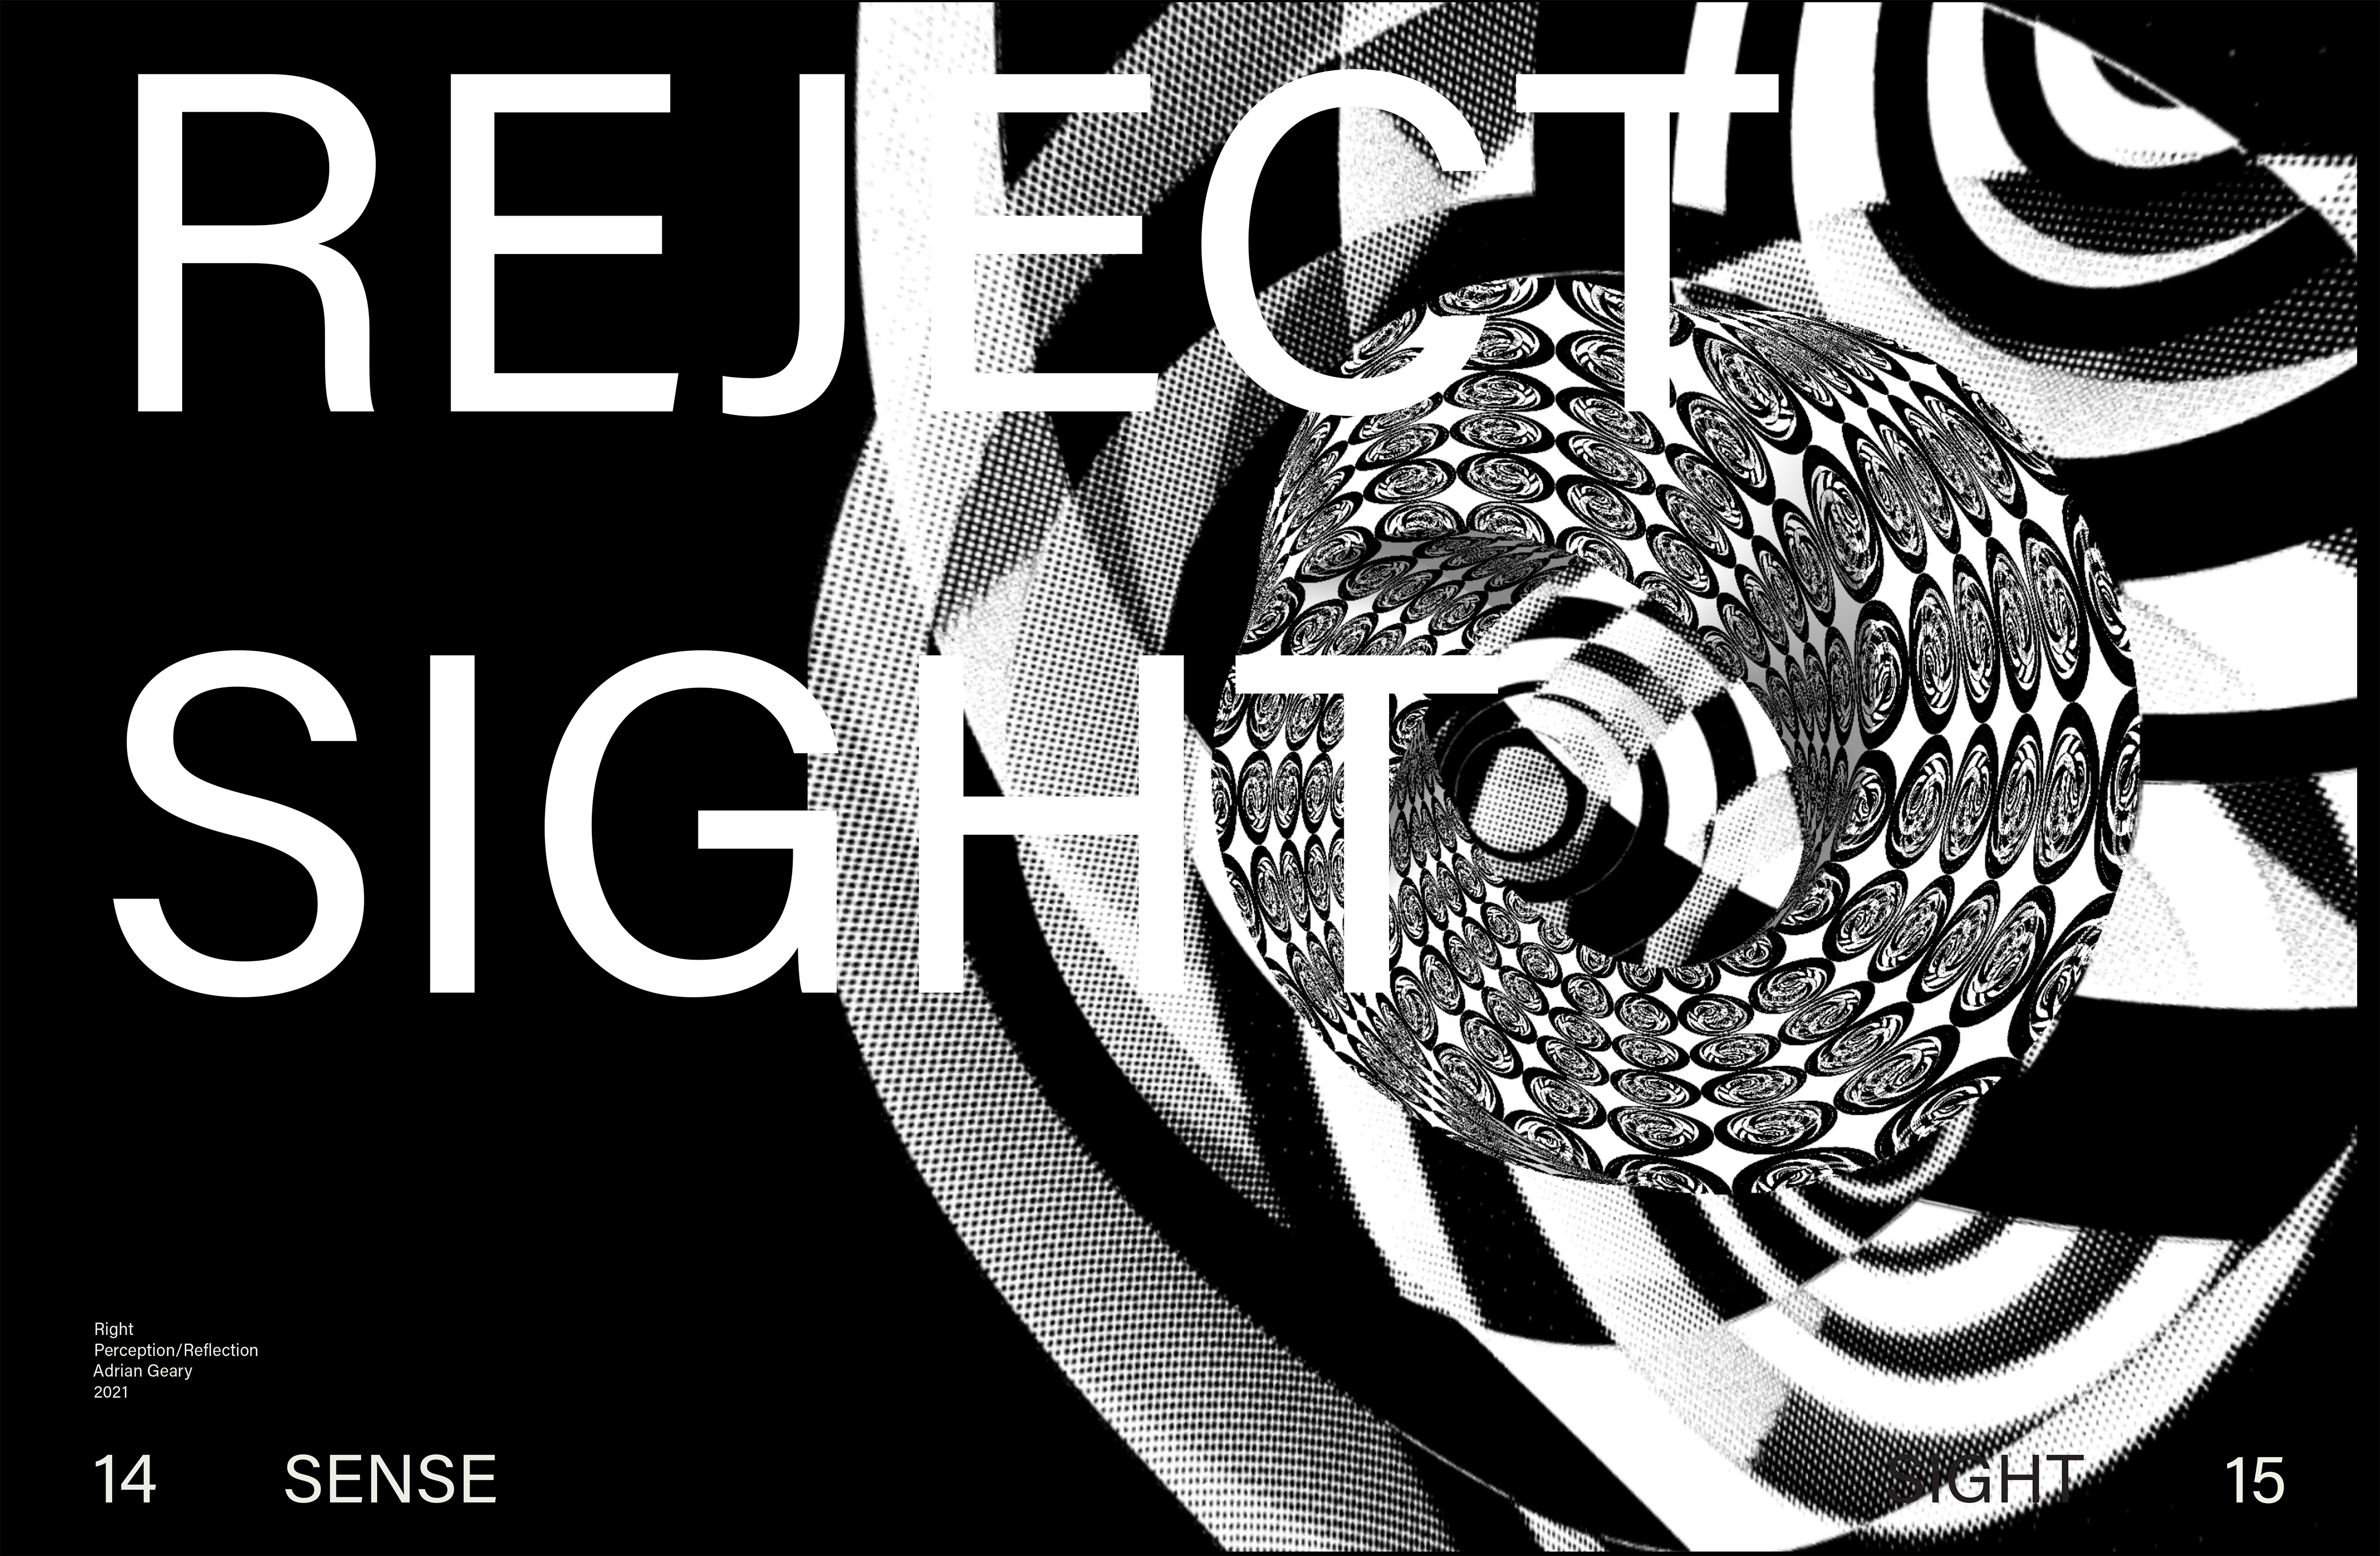 05 Sight — Object / Sense